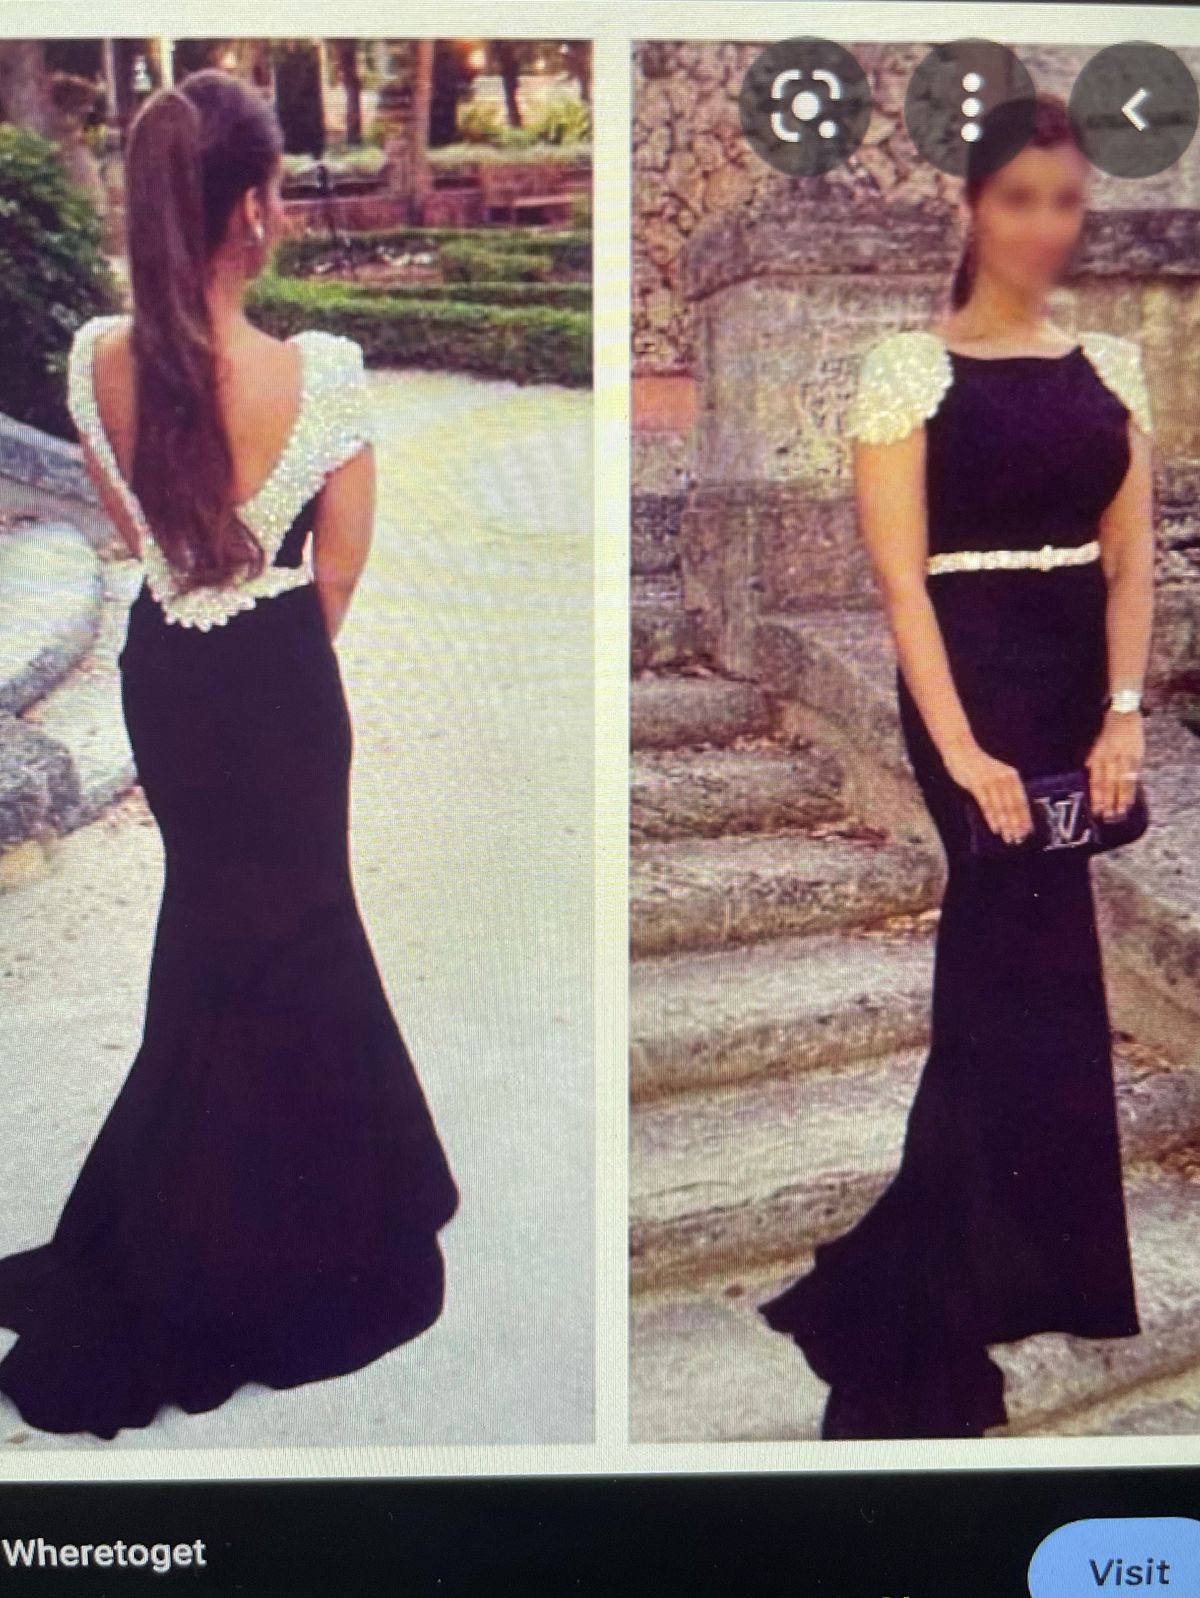 Tarik Ediz Size 4 Prom Cap Sleeve Sequined Black Ball Gown on Queenly